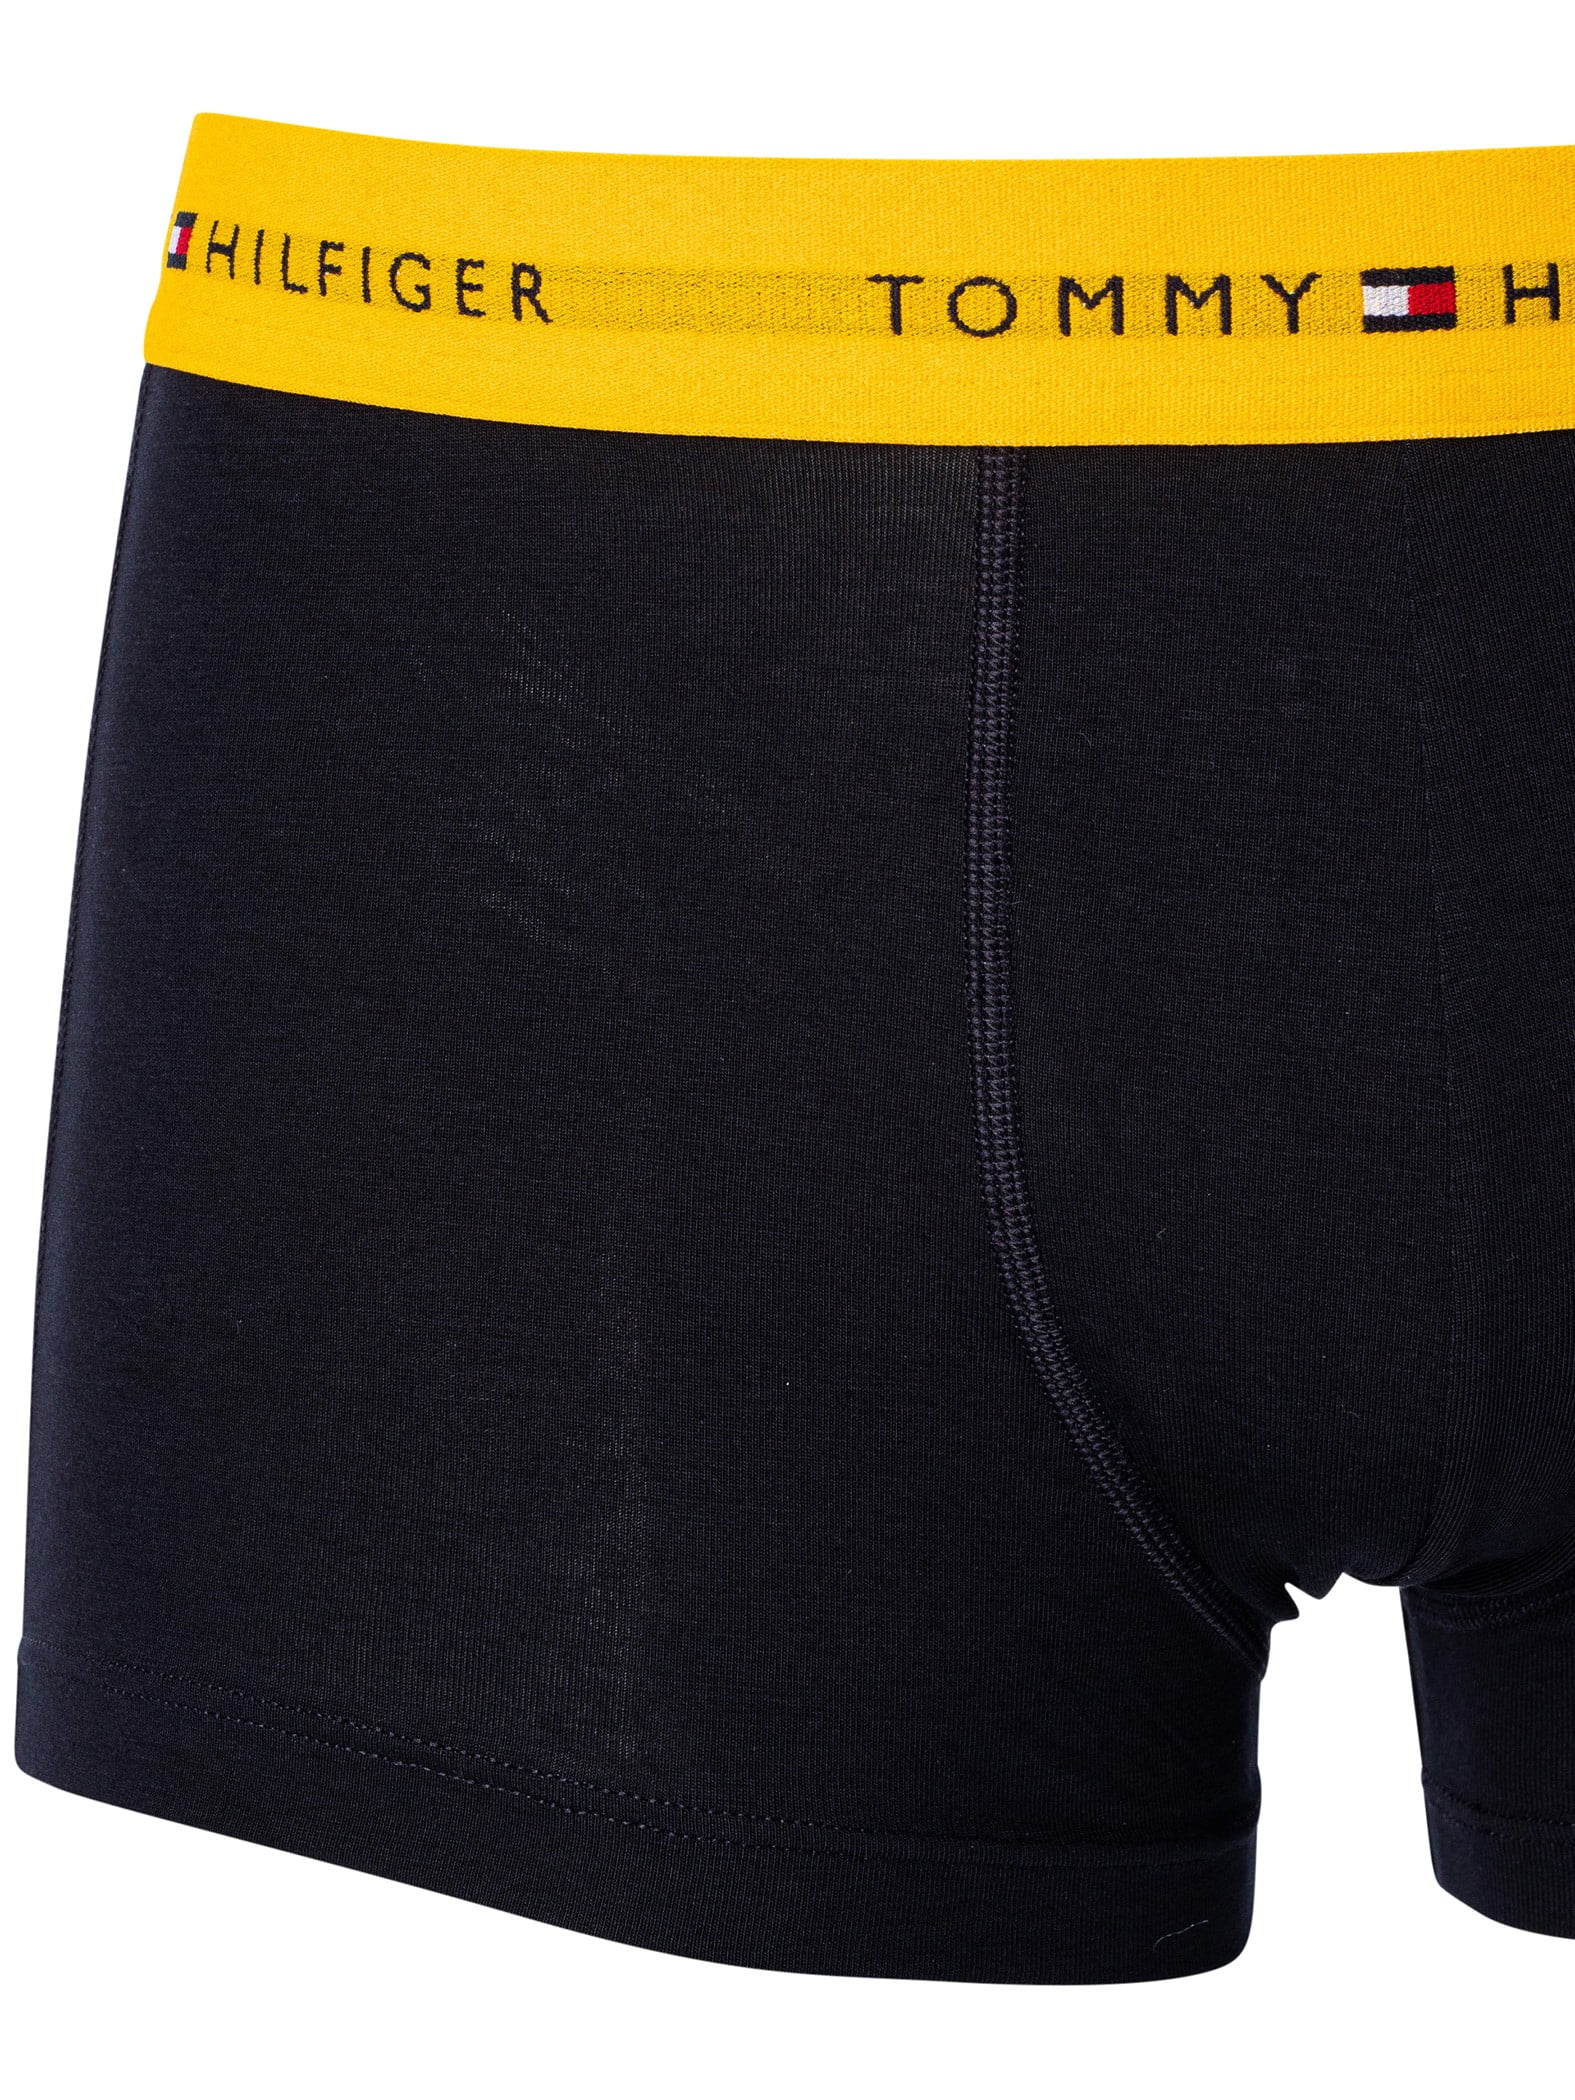 Tommy Hilfiger 3 Pack Signature Cotton Essentials Trunks, Black 